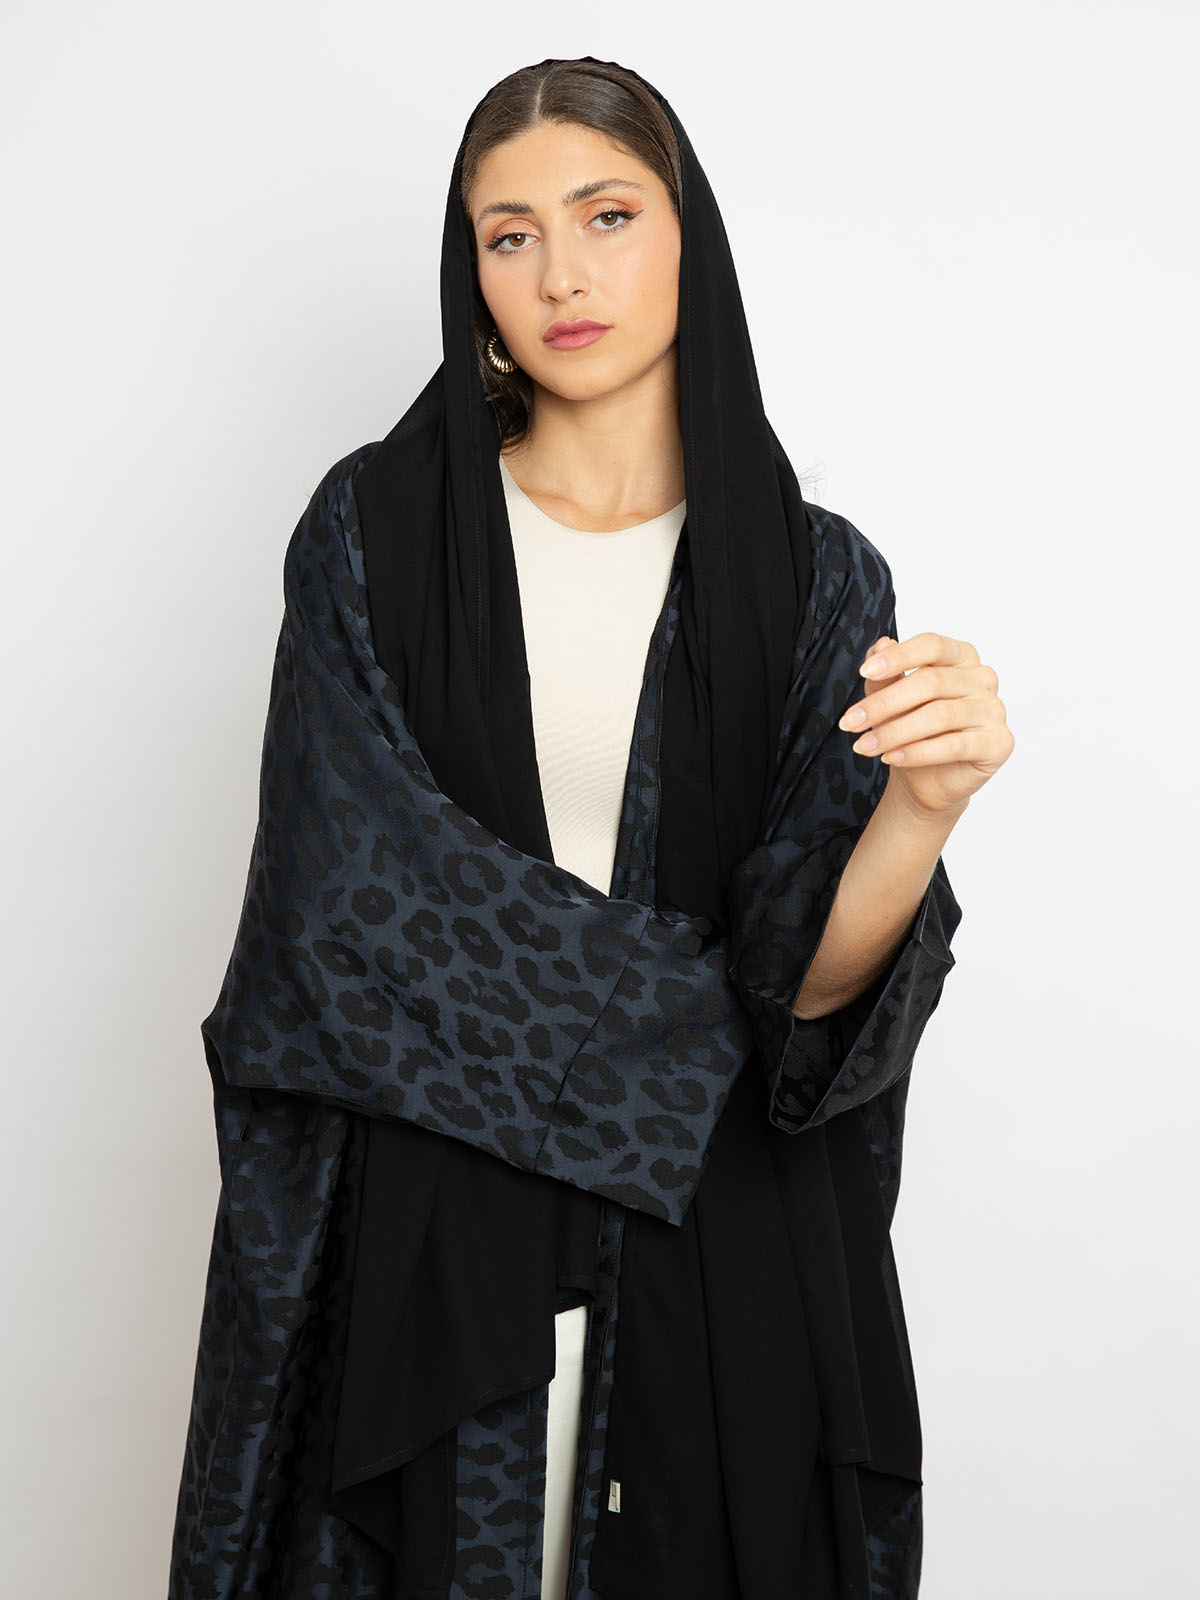 Kaafmeem women clothing wide fit navy color long fancy open abaya with cheetah print in satin feel fabric